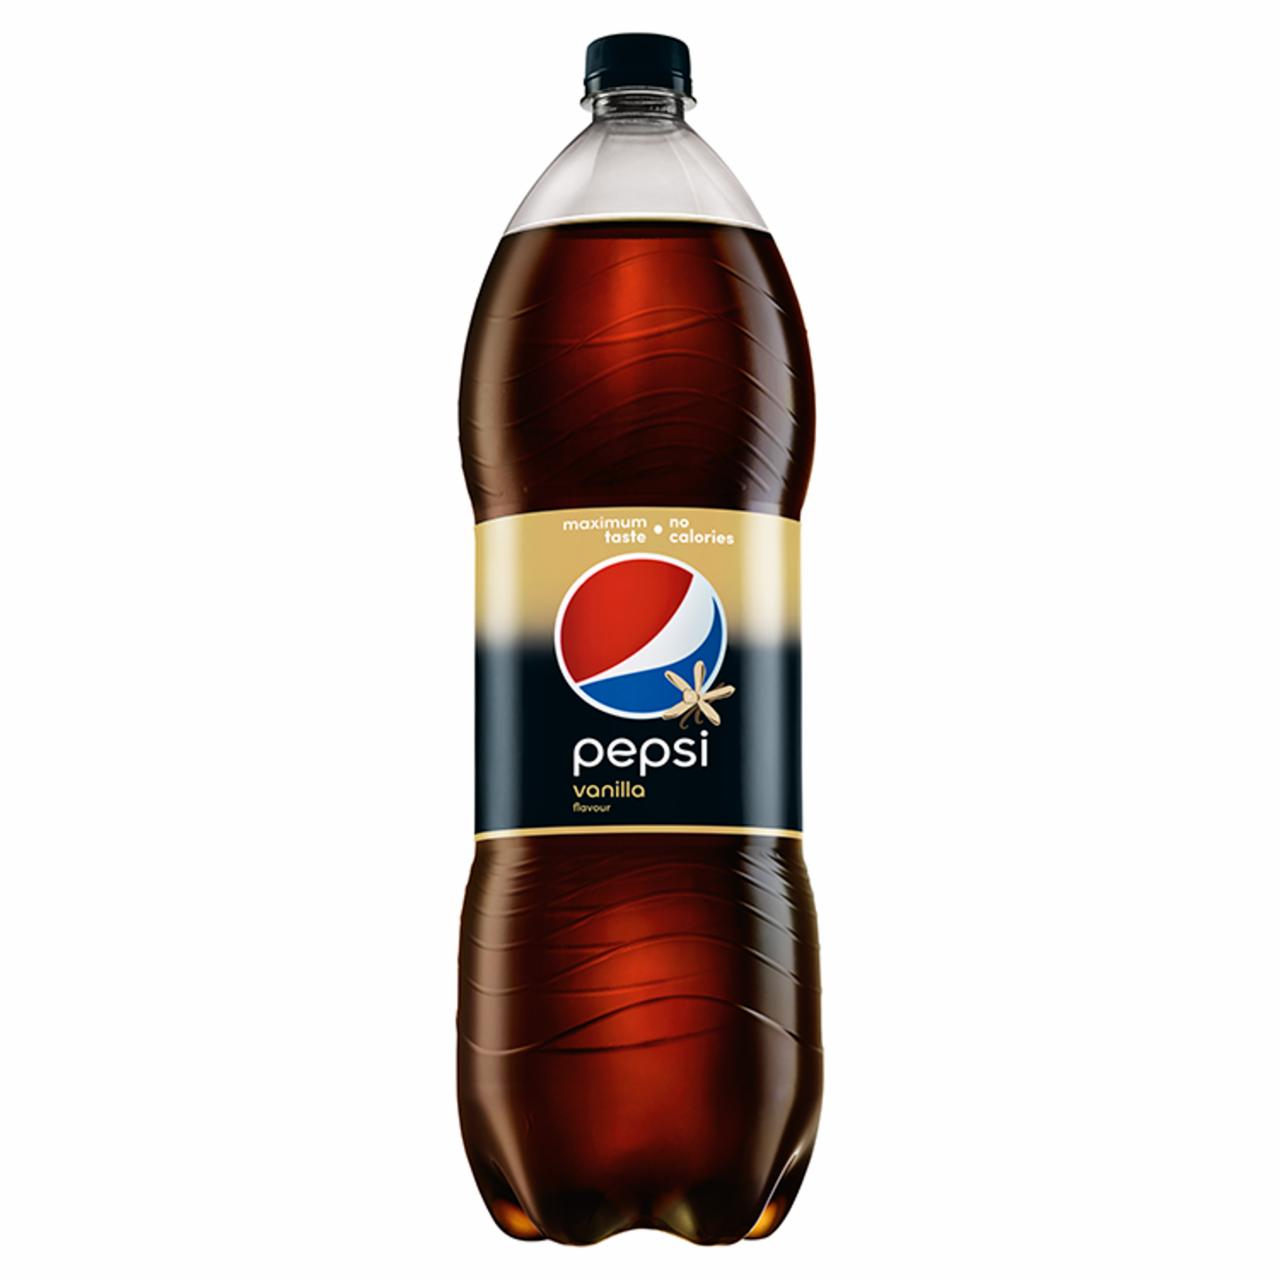 Zdjęcia - Pepsi Vanilla Napój gazowany 1,75 l